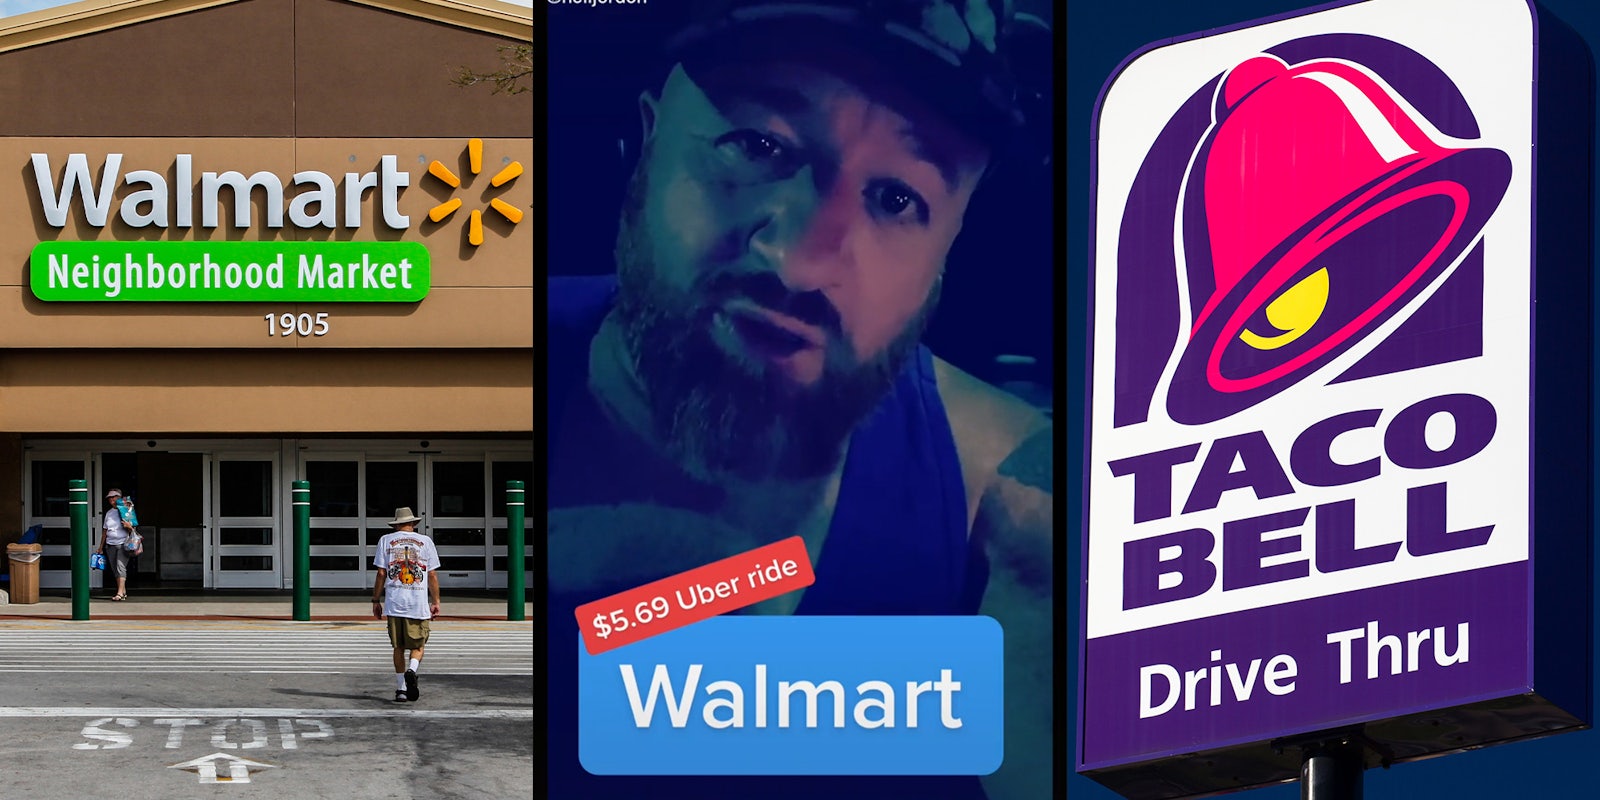 walmart neighborhood market sign (l) man in car with caption '$5.69 Uber ride - Walmart' (c) Taco Bell drive thru sign (r)